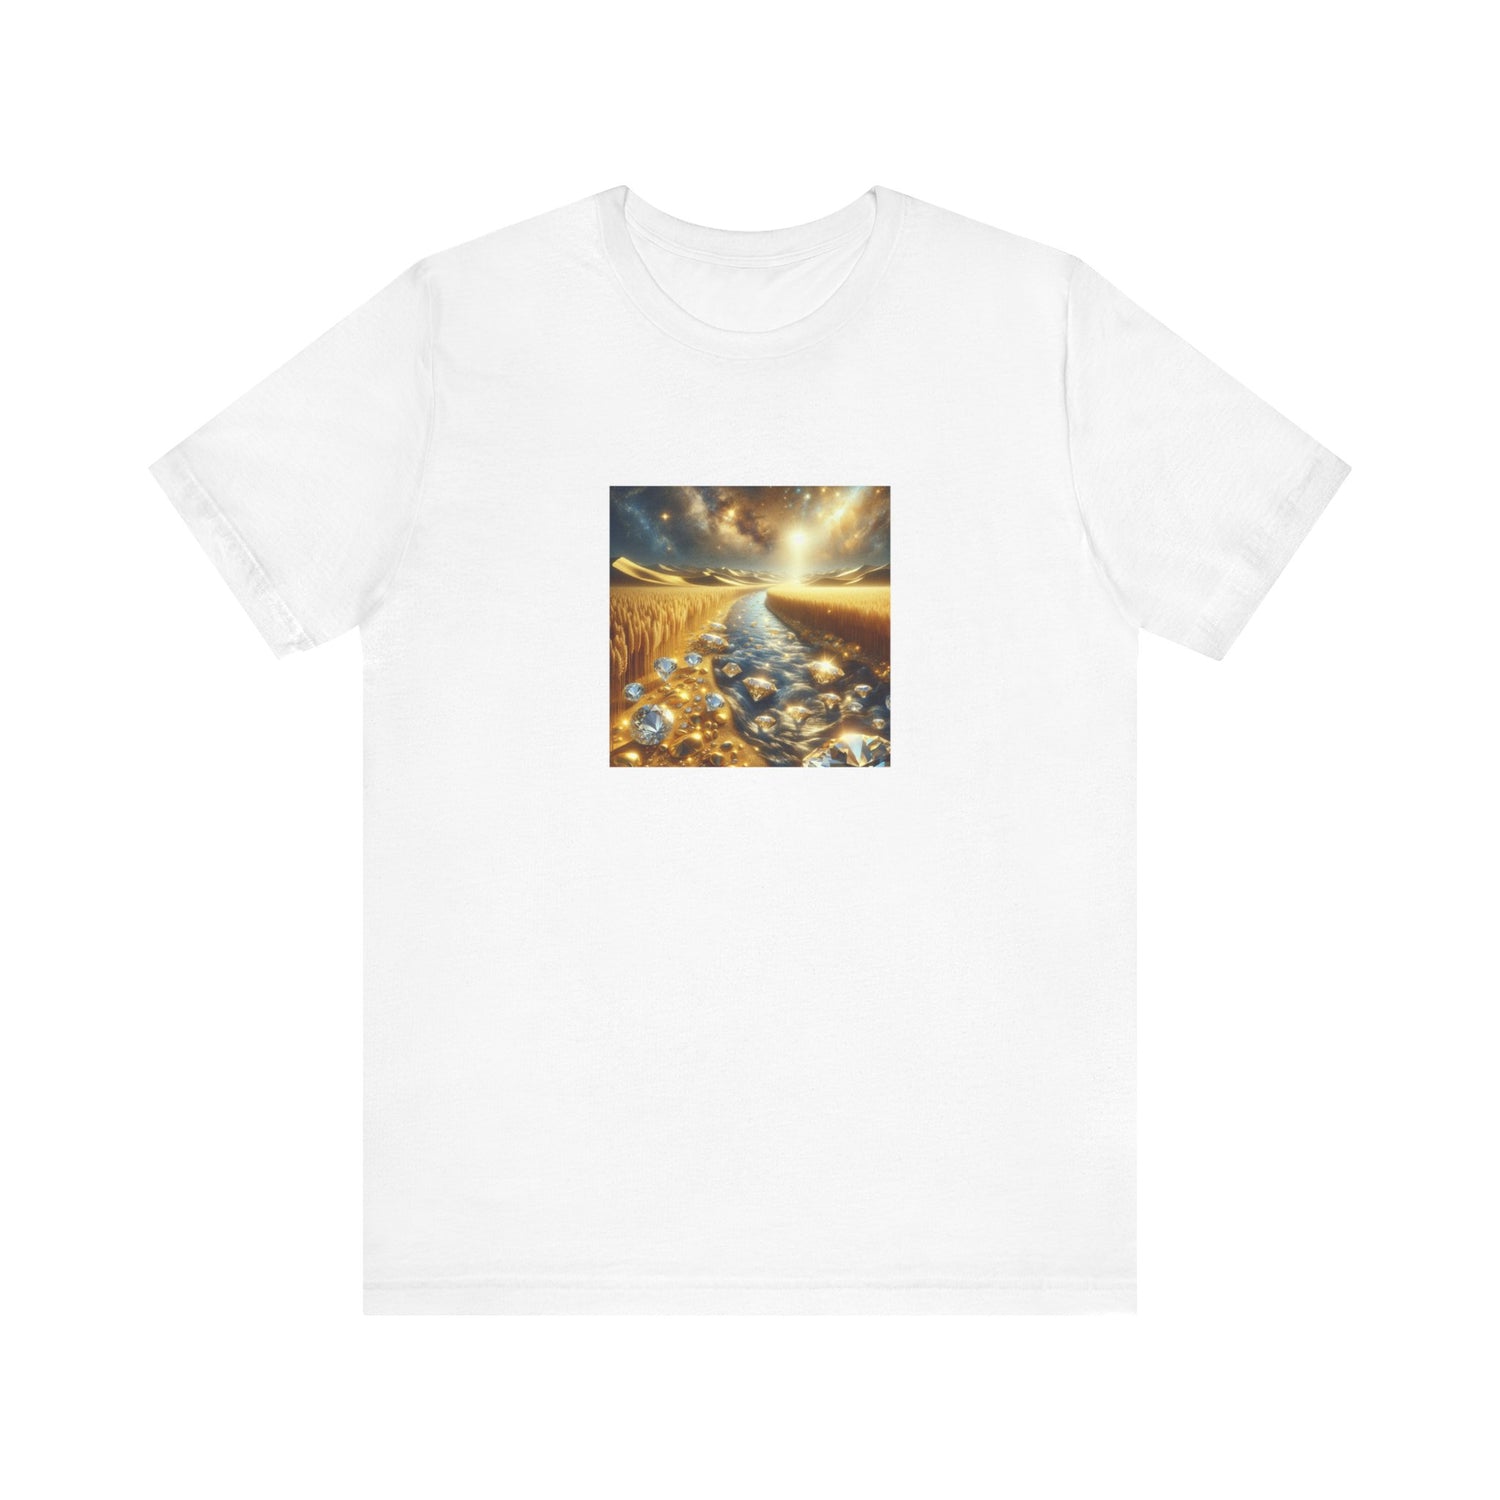 Gold and Diamond T-shirt